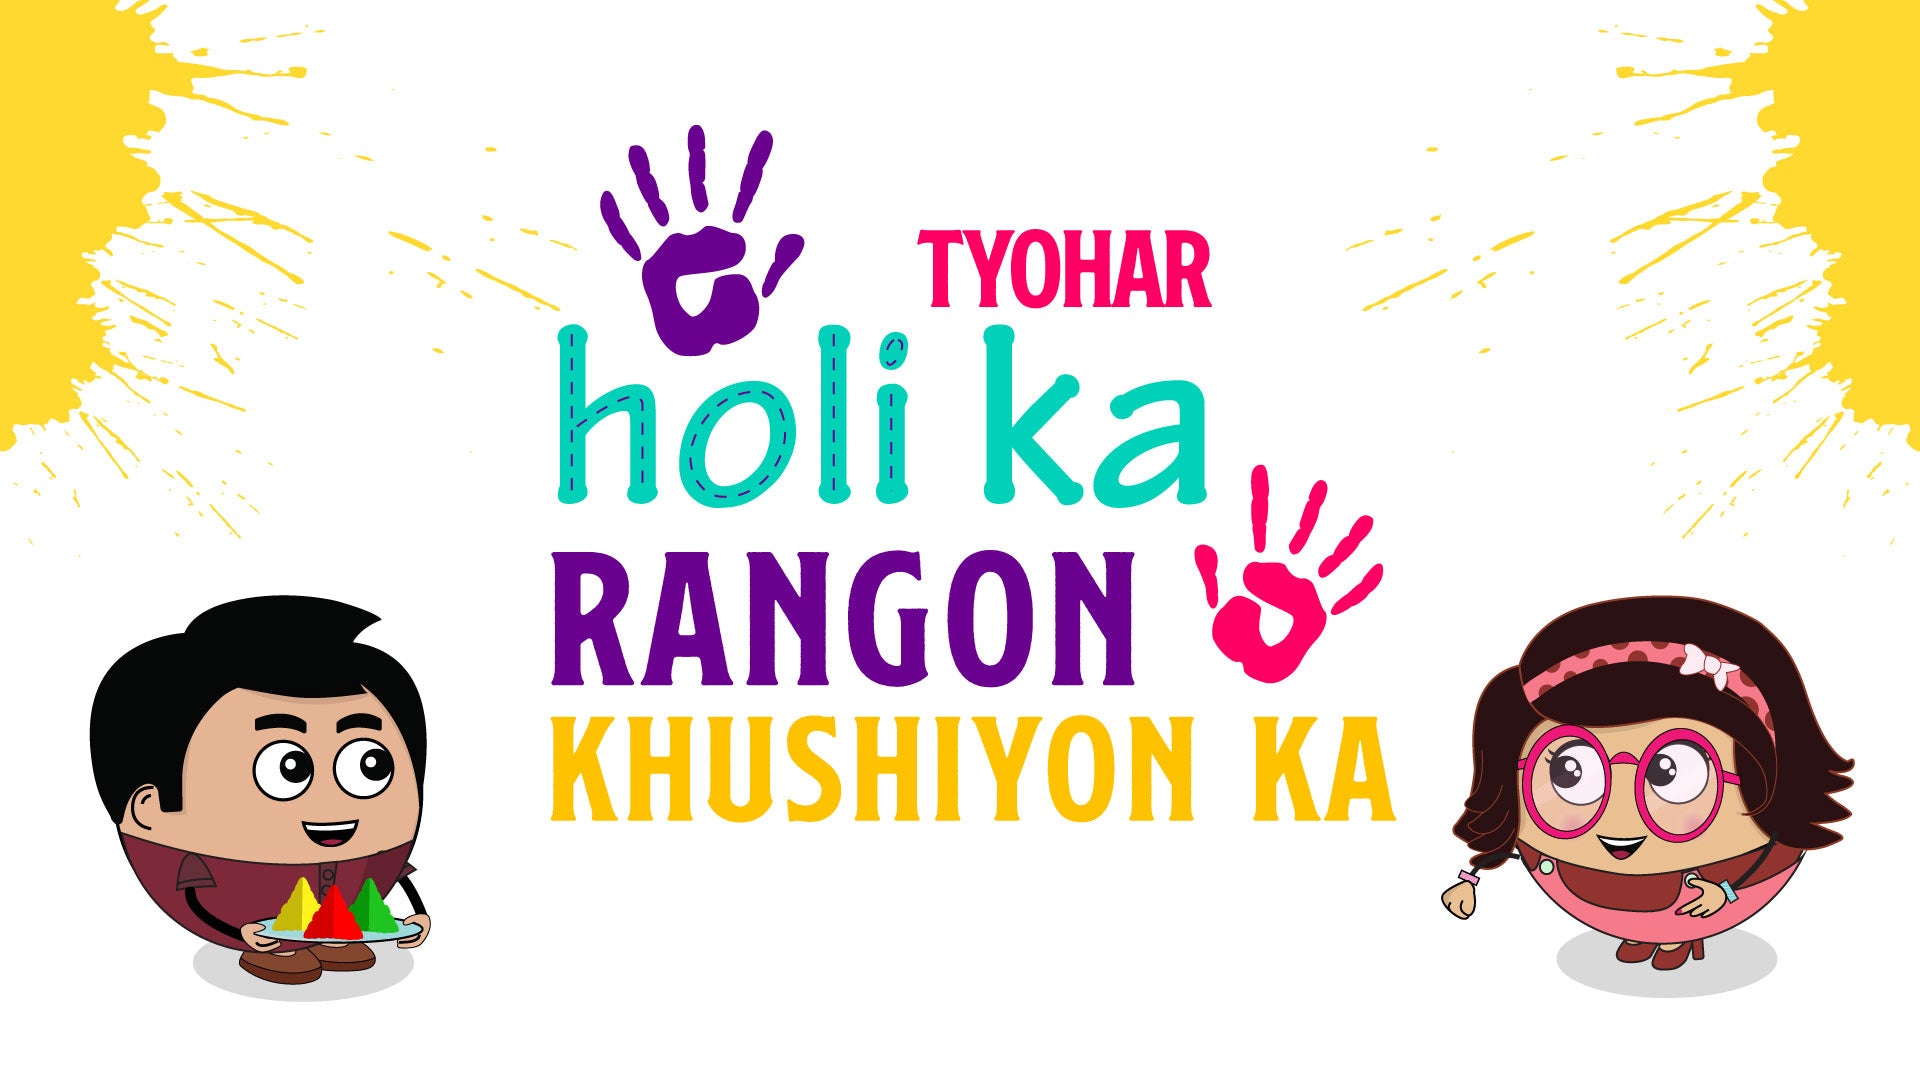 Amazing Facts About Holi: Why Do We Celebrate It?